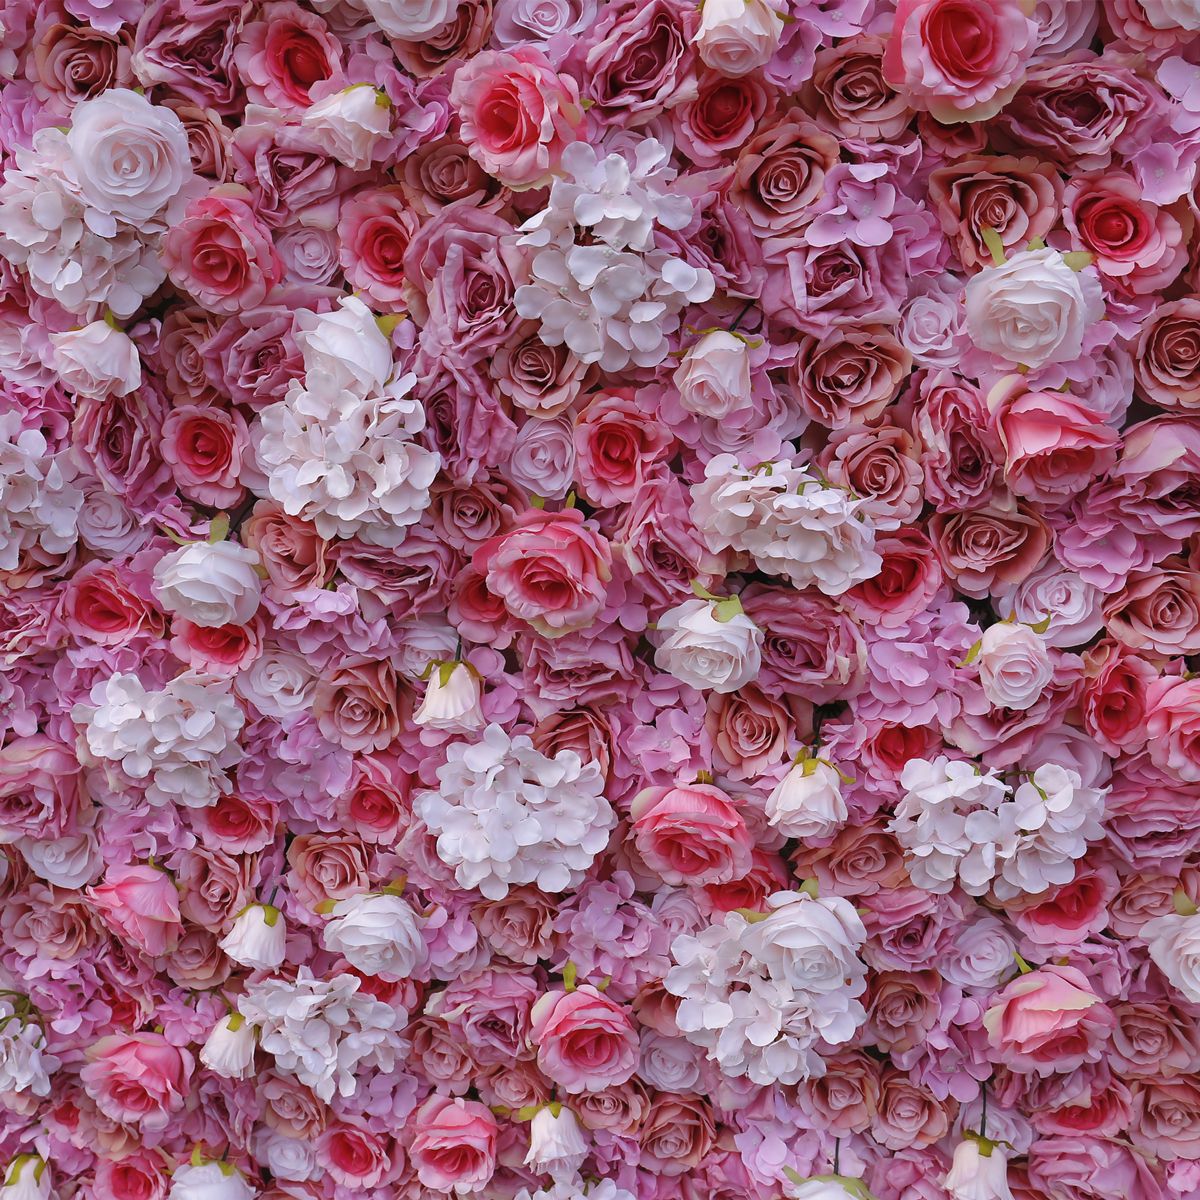  Ka lole male ma lalo Simulation Flower Wall Background Wall Film Studio Background Silk Flower Row Plant Wall Flower Wall 